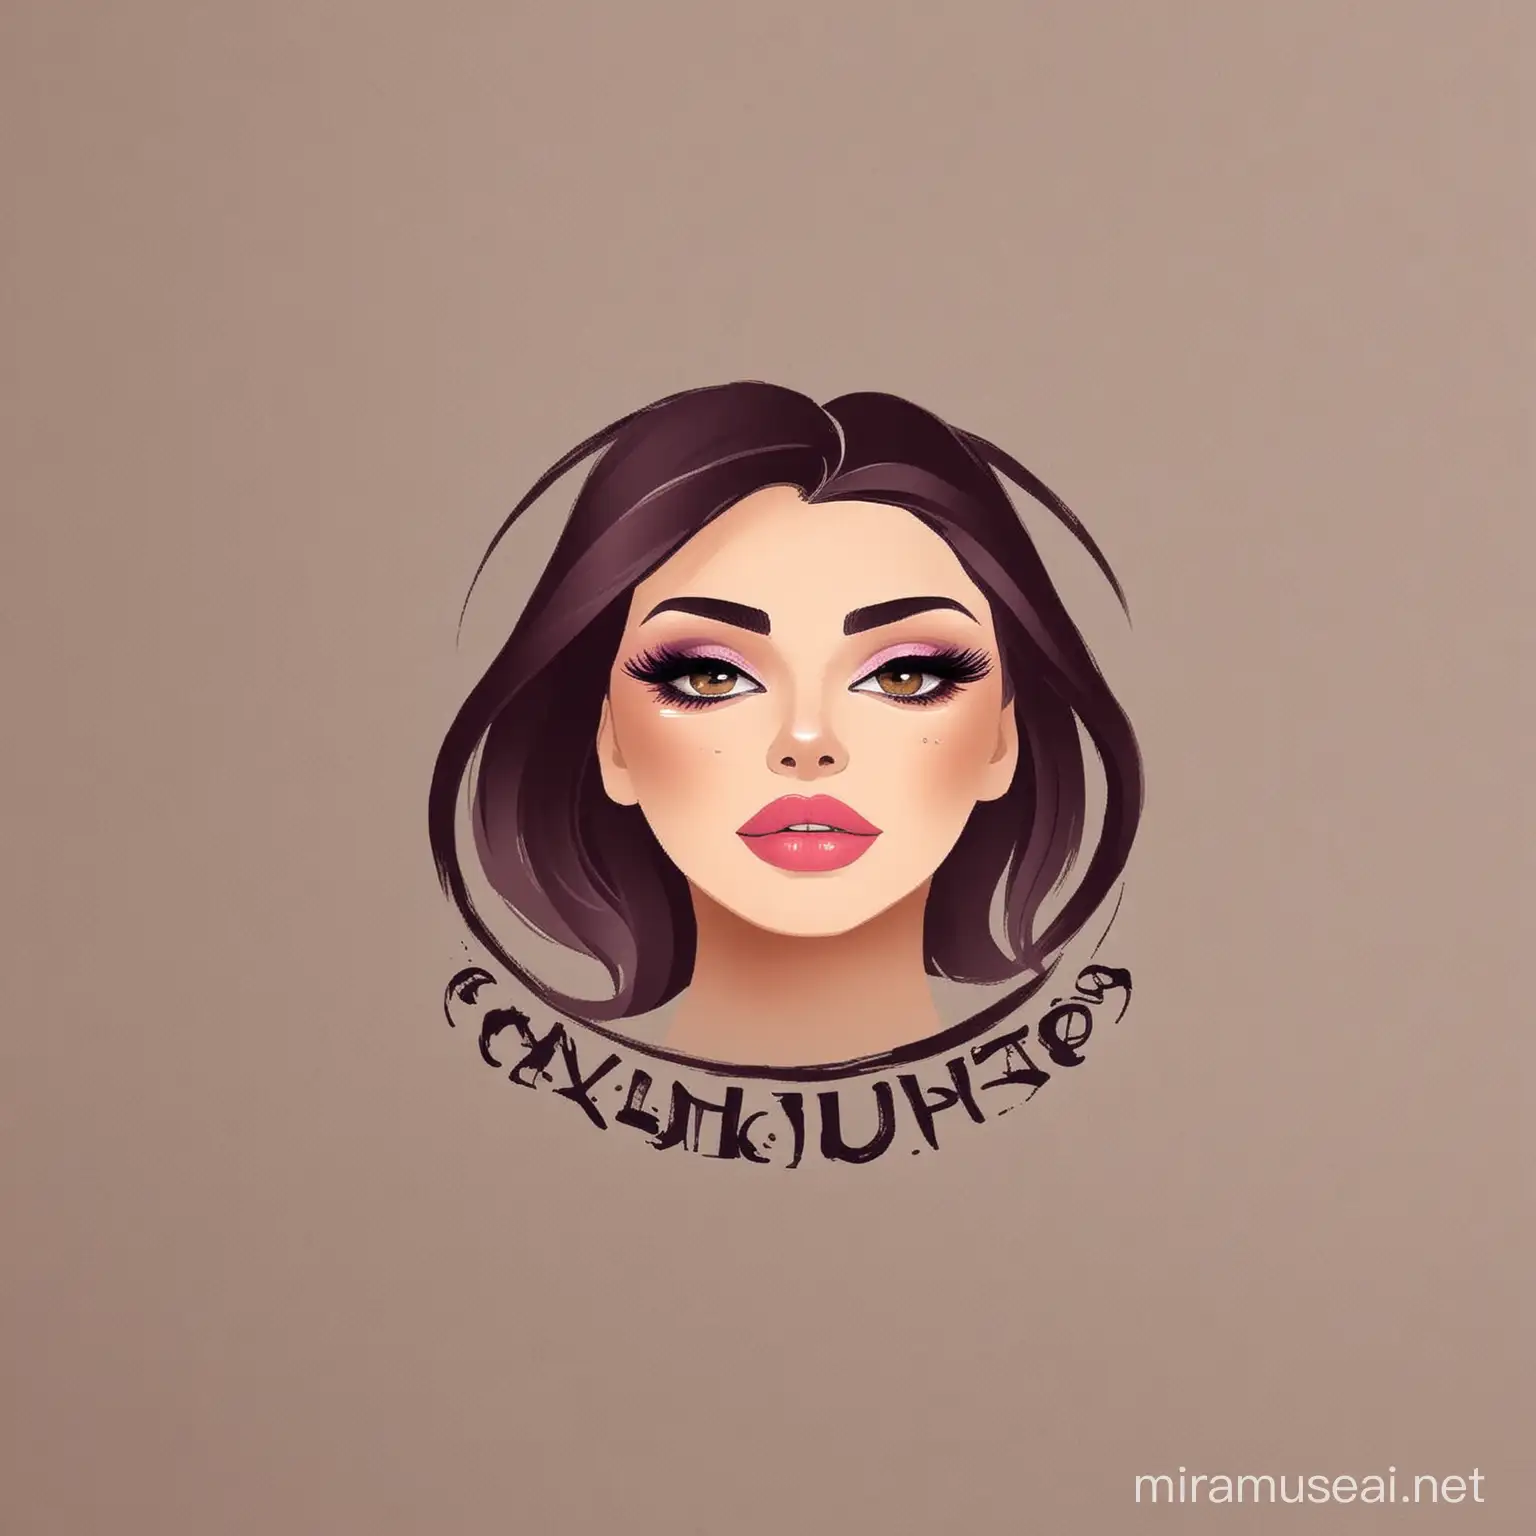 Glamorous Makeup Website Logo Design